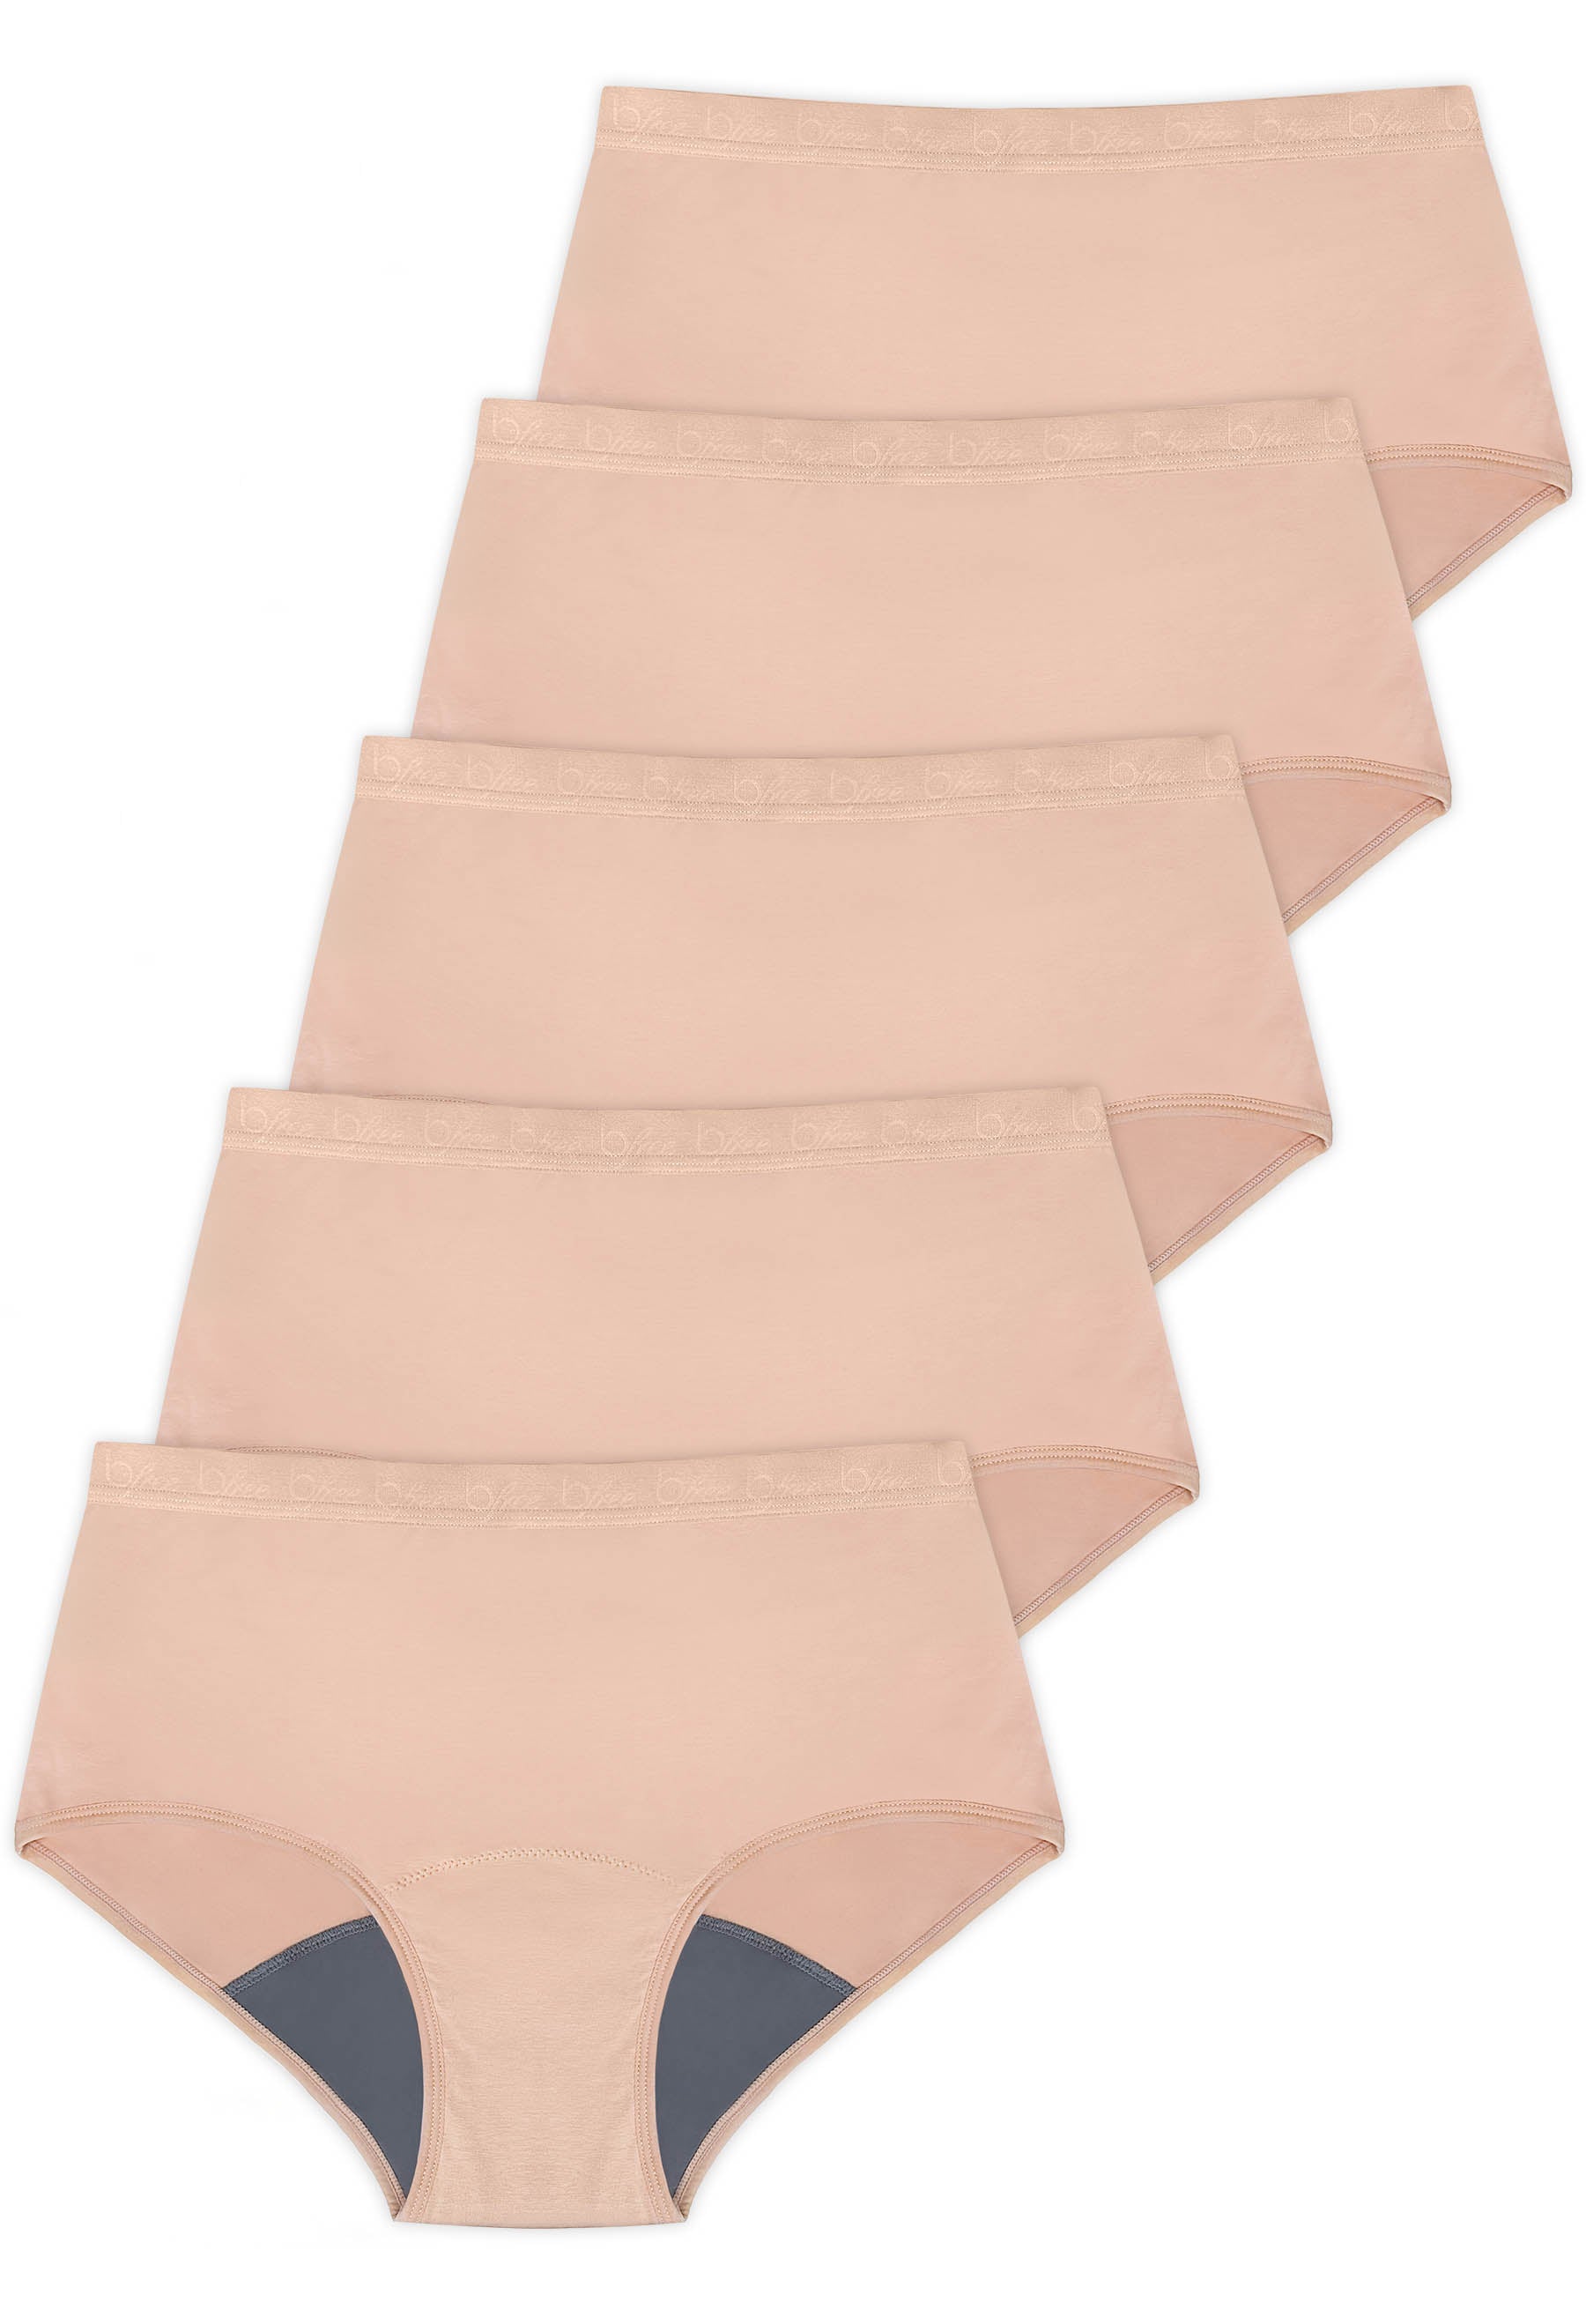 Cotton Panty Liner Leak Proof Period Underwear 5 Pack